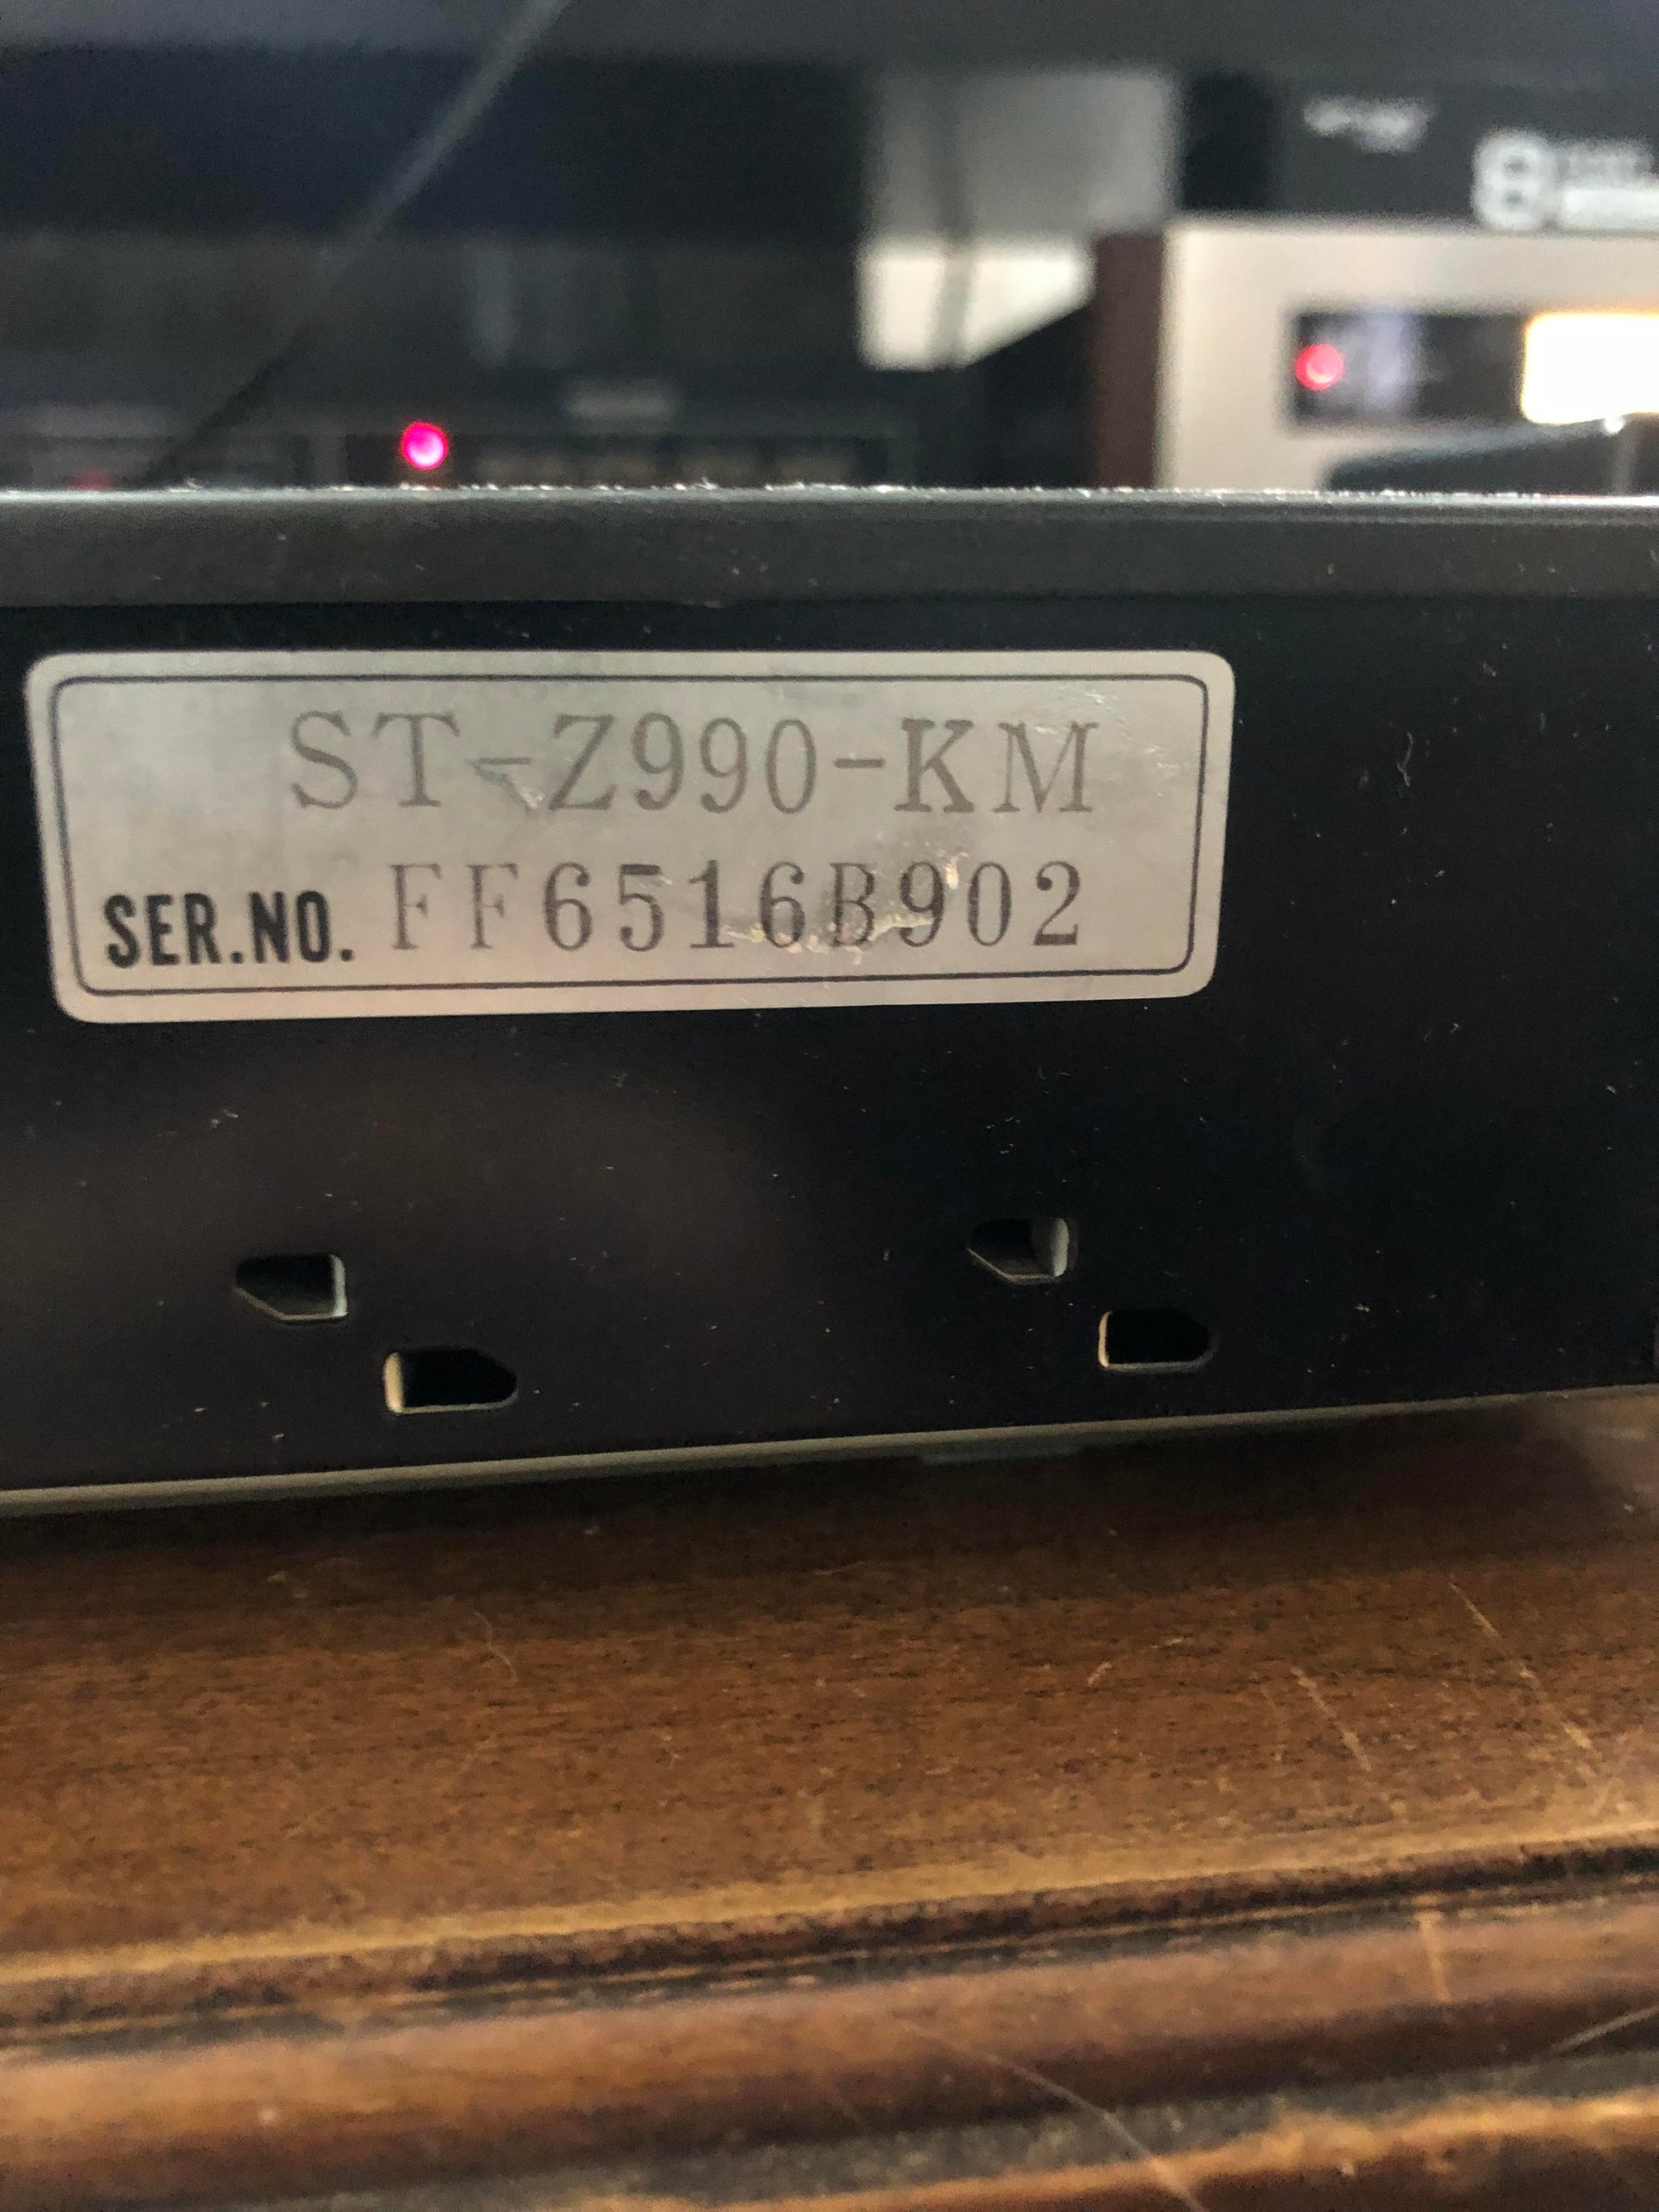 Technics ST-Z990 Quartz Synthesizer AM/FM Stereo Tuner 16 Channel - Endless Media